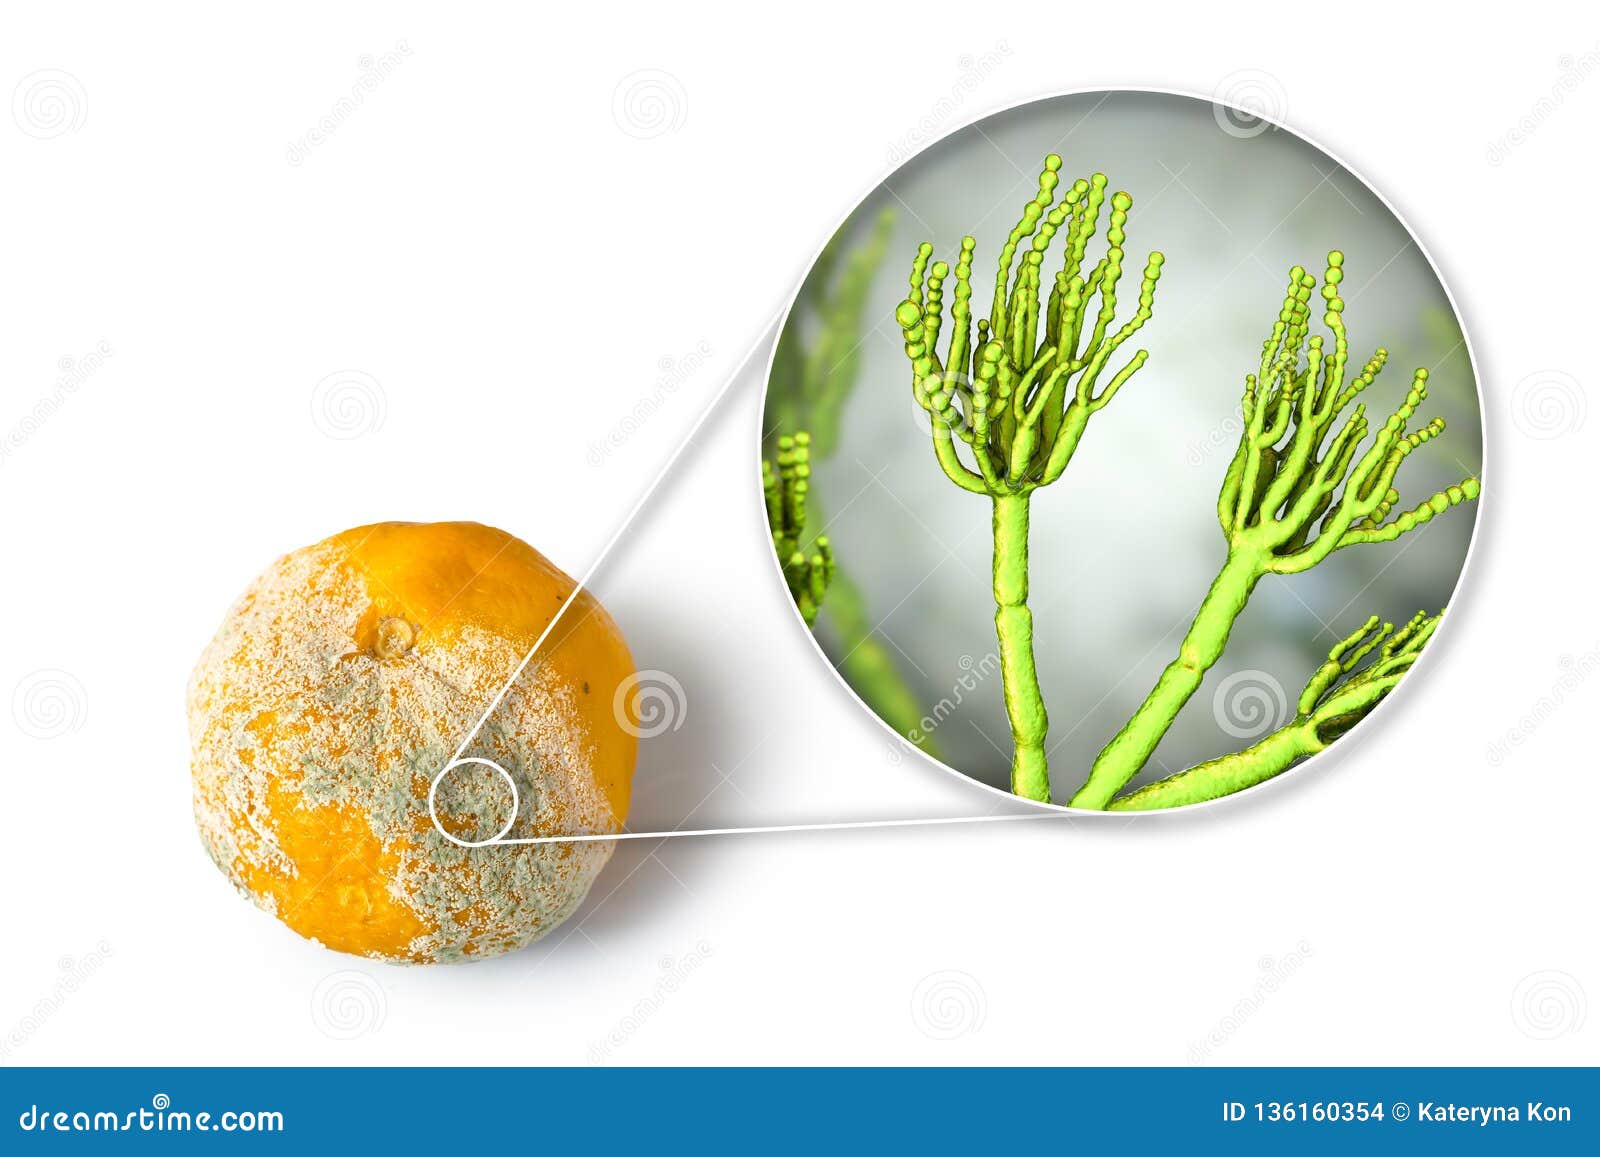 a mandarin with mold, fungi penicillium which cause food spoilage